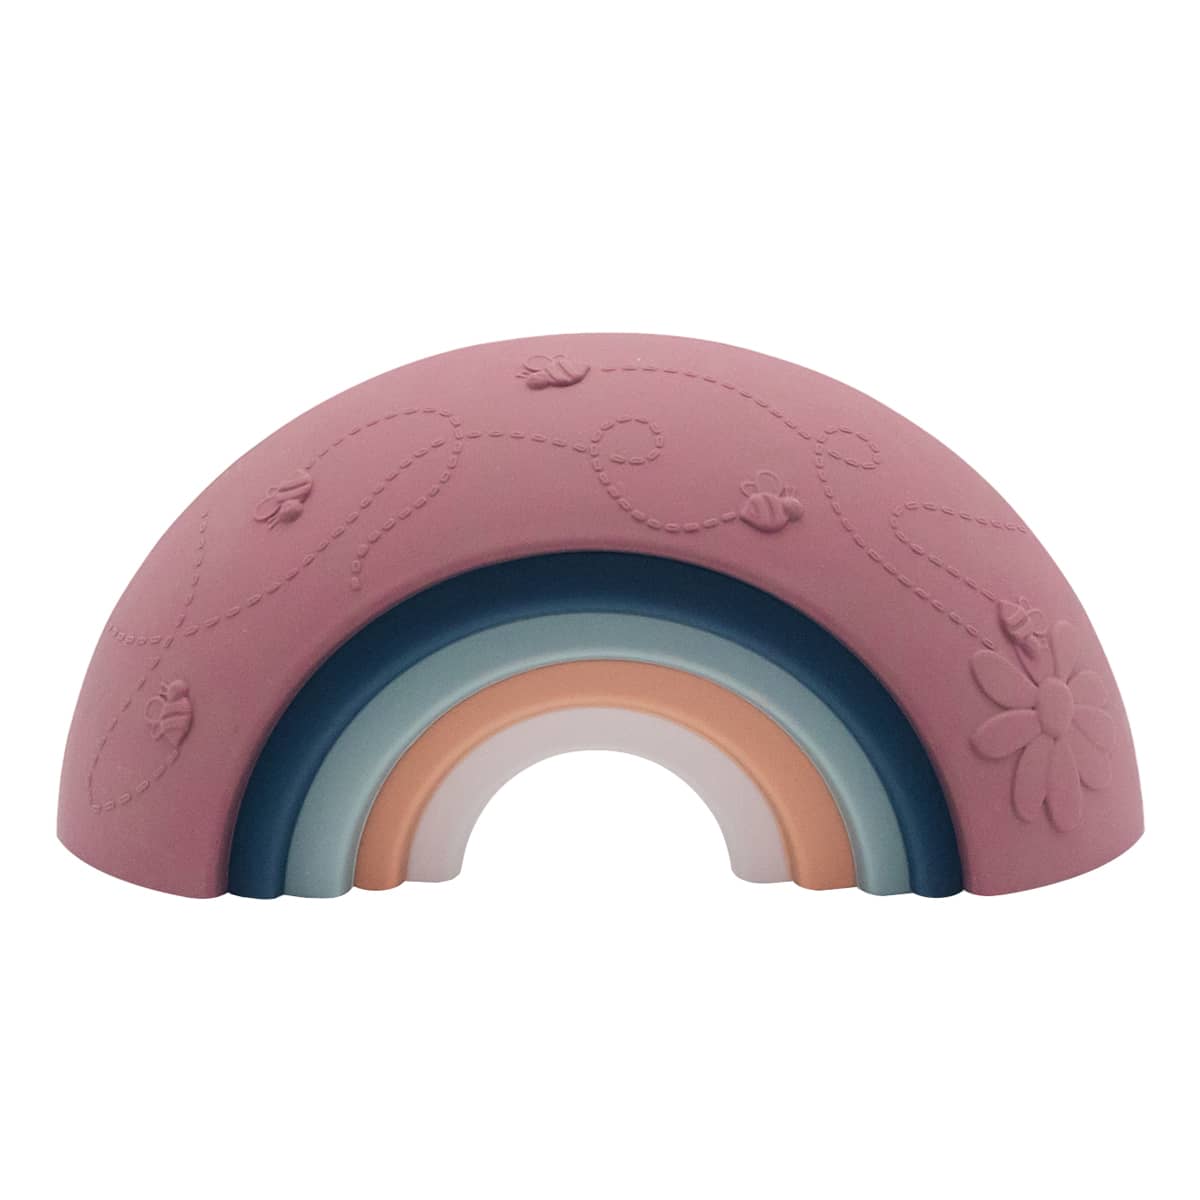 Jellystone Designs Over the Rainbow Silicone Arches - Earth